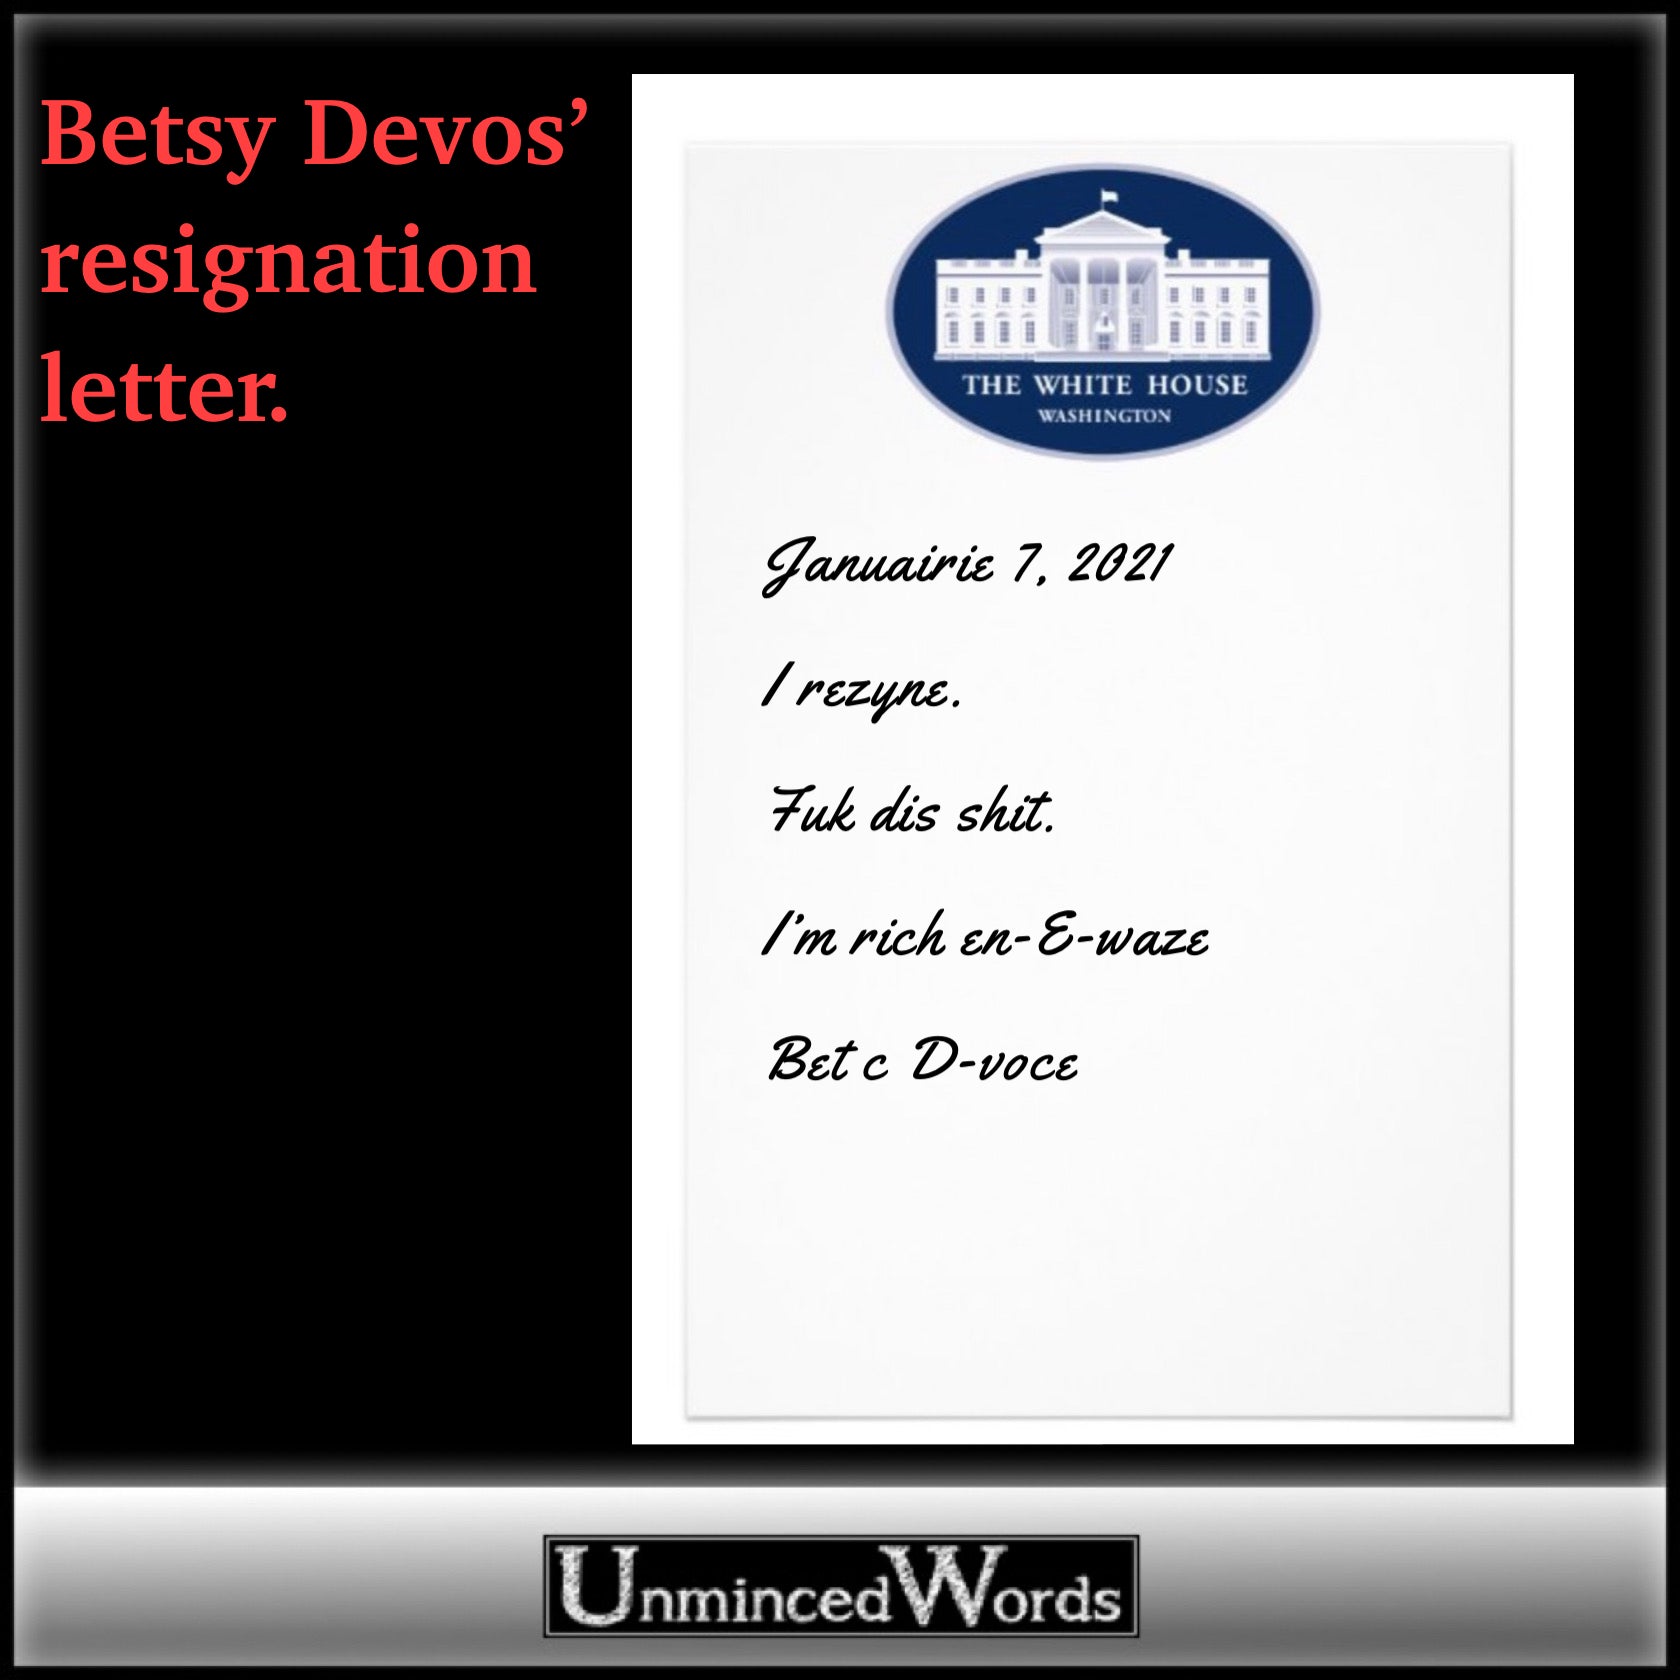 Betsy Devos’ resignation letter, by UnmincedWords.com